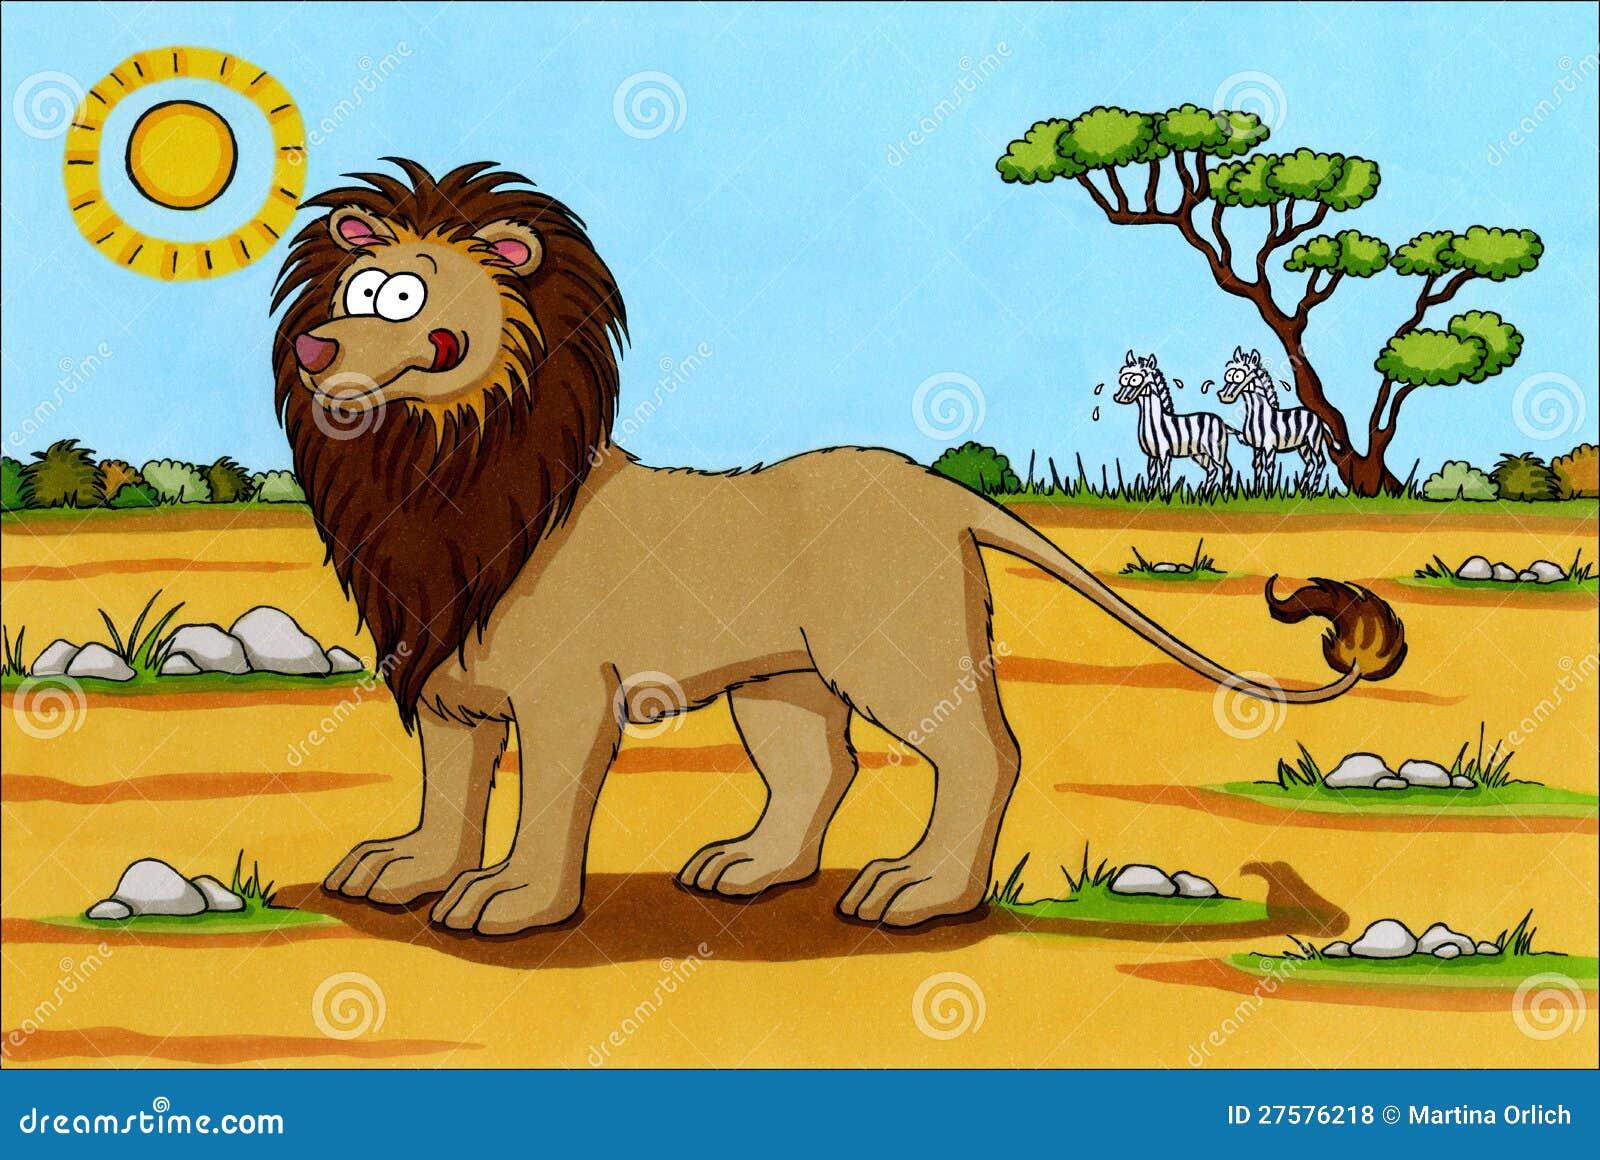 Africa Cartoon - Lion With Zebras Stock Illustration ...